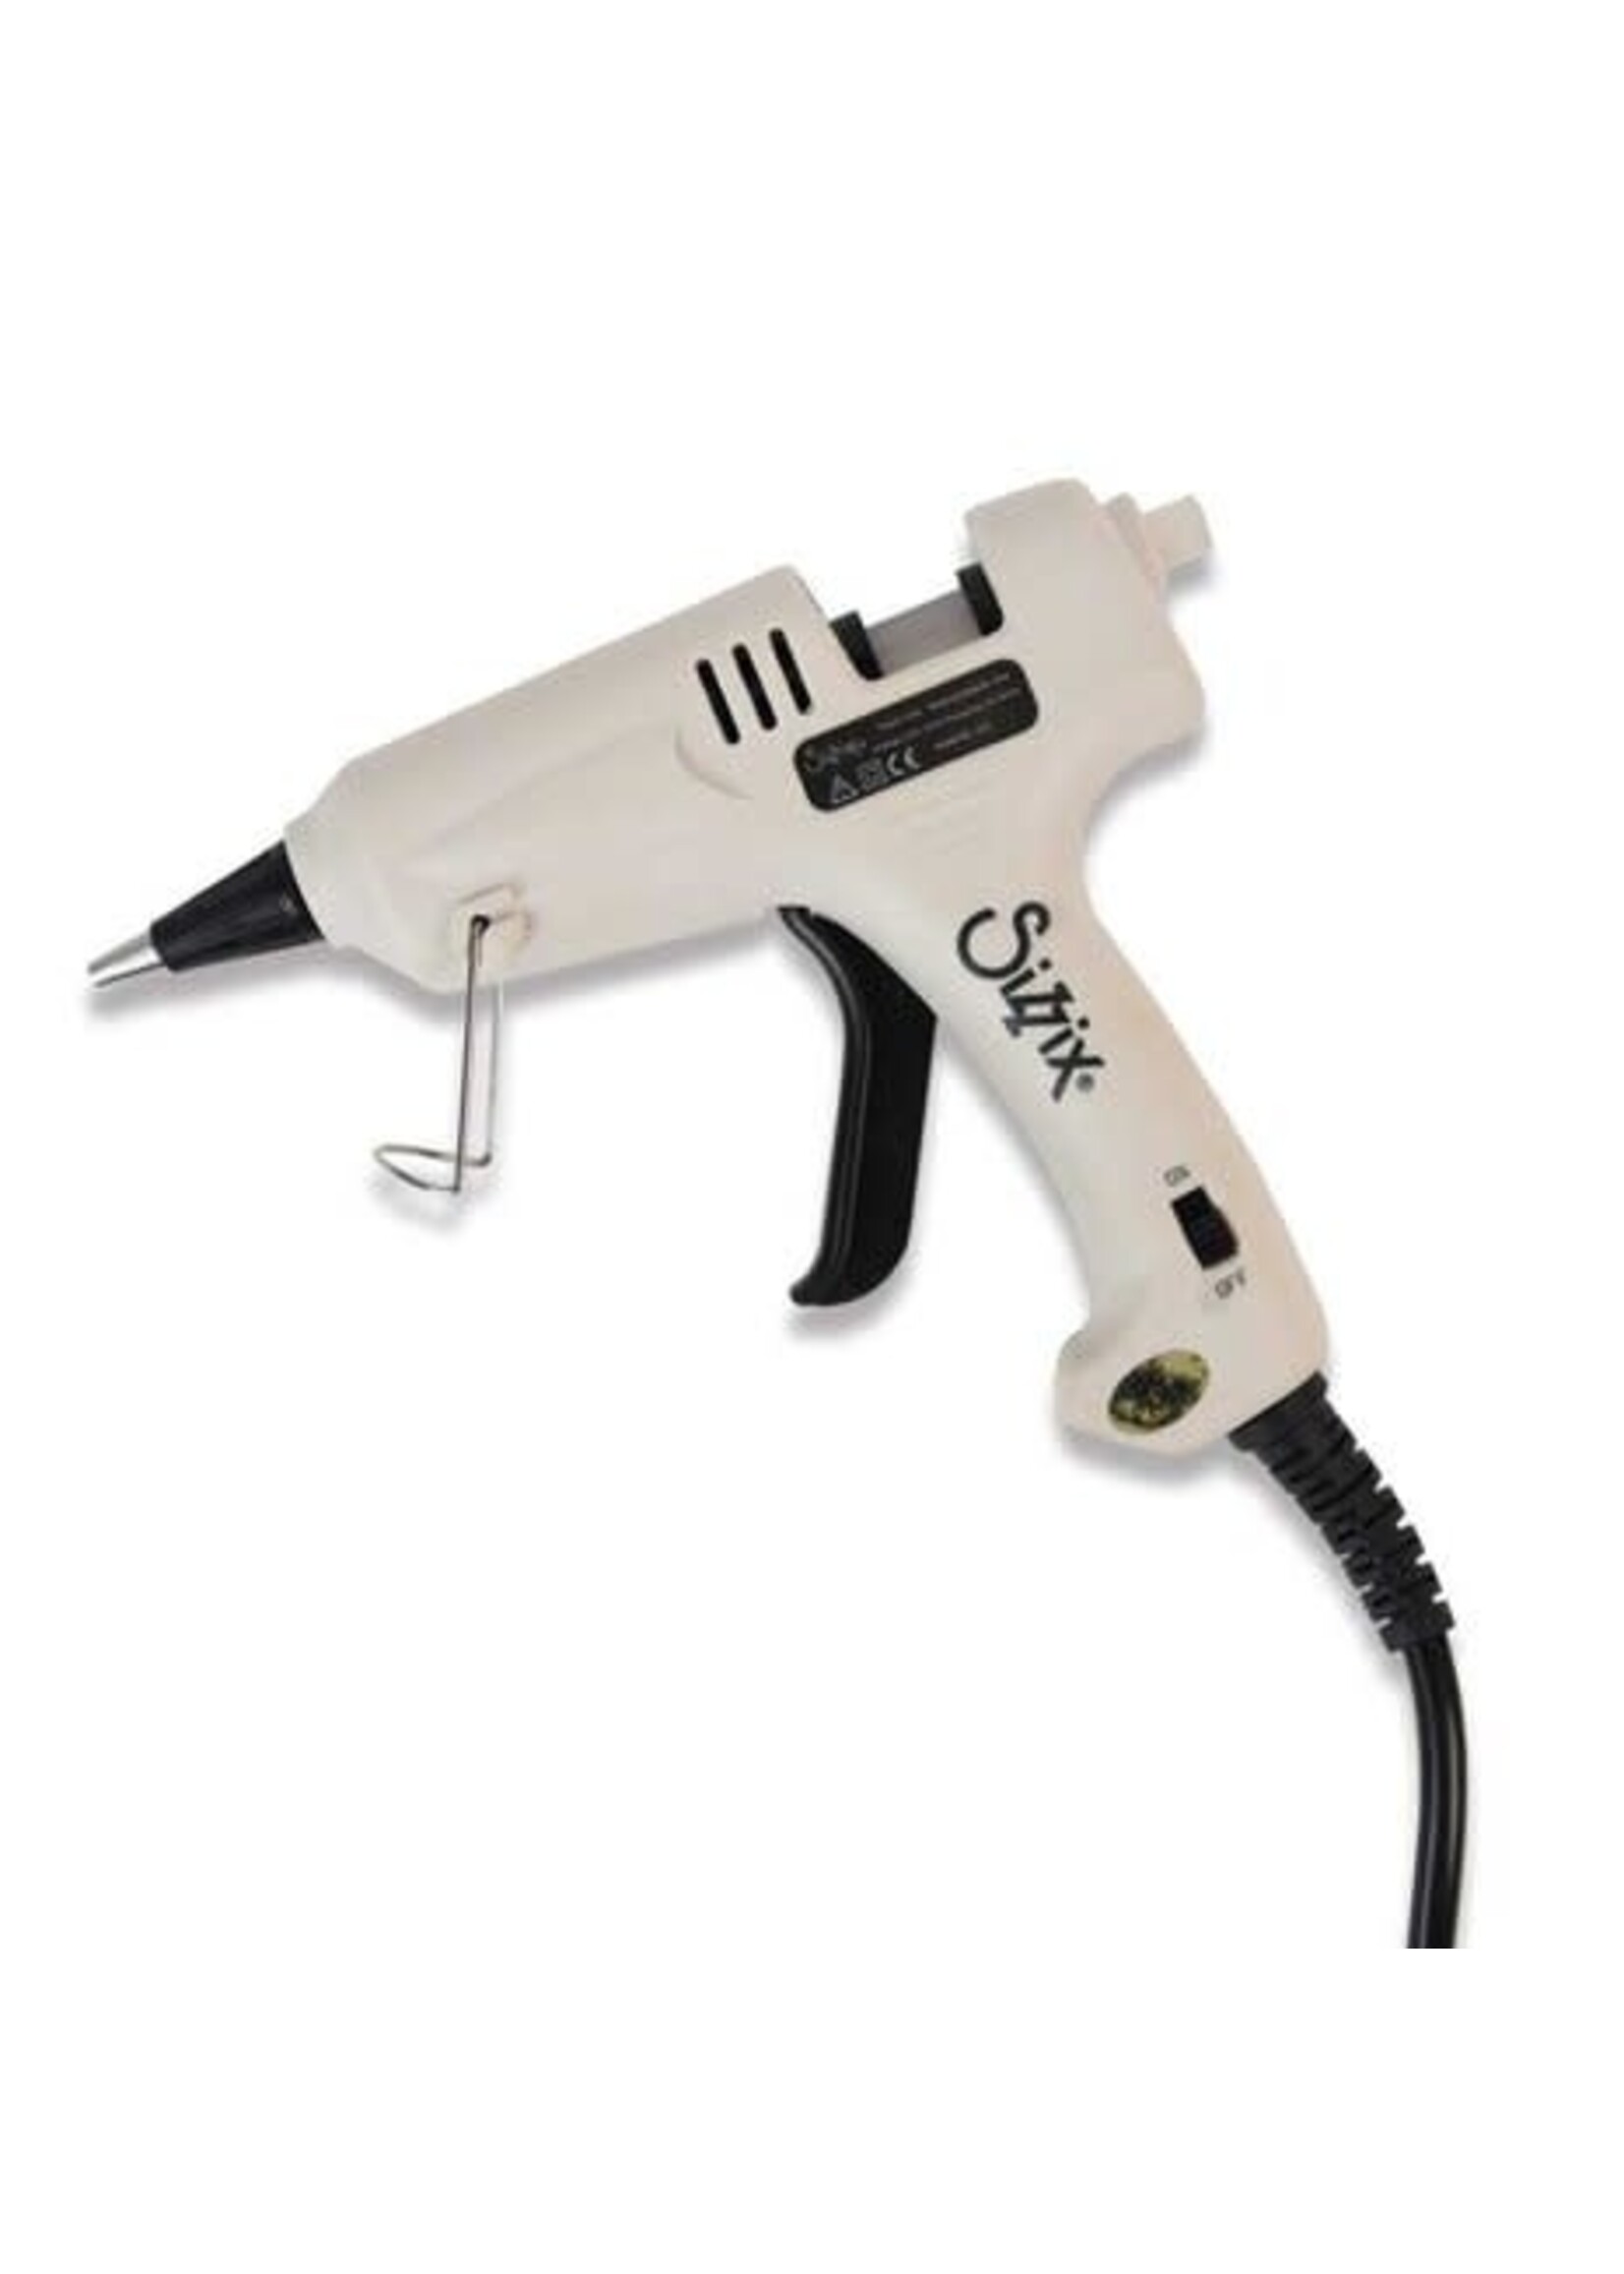 Sizzix Sizzix Glue Gun (UK Version w/EU Adapter) (662301)